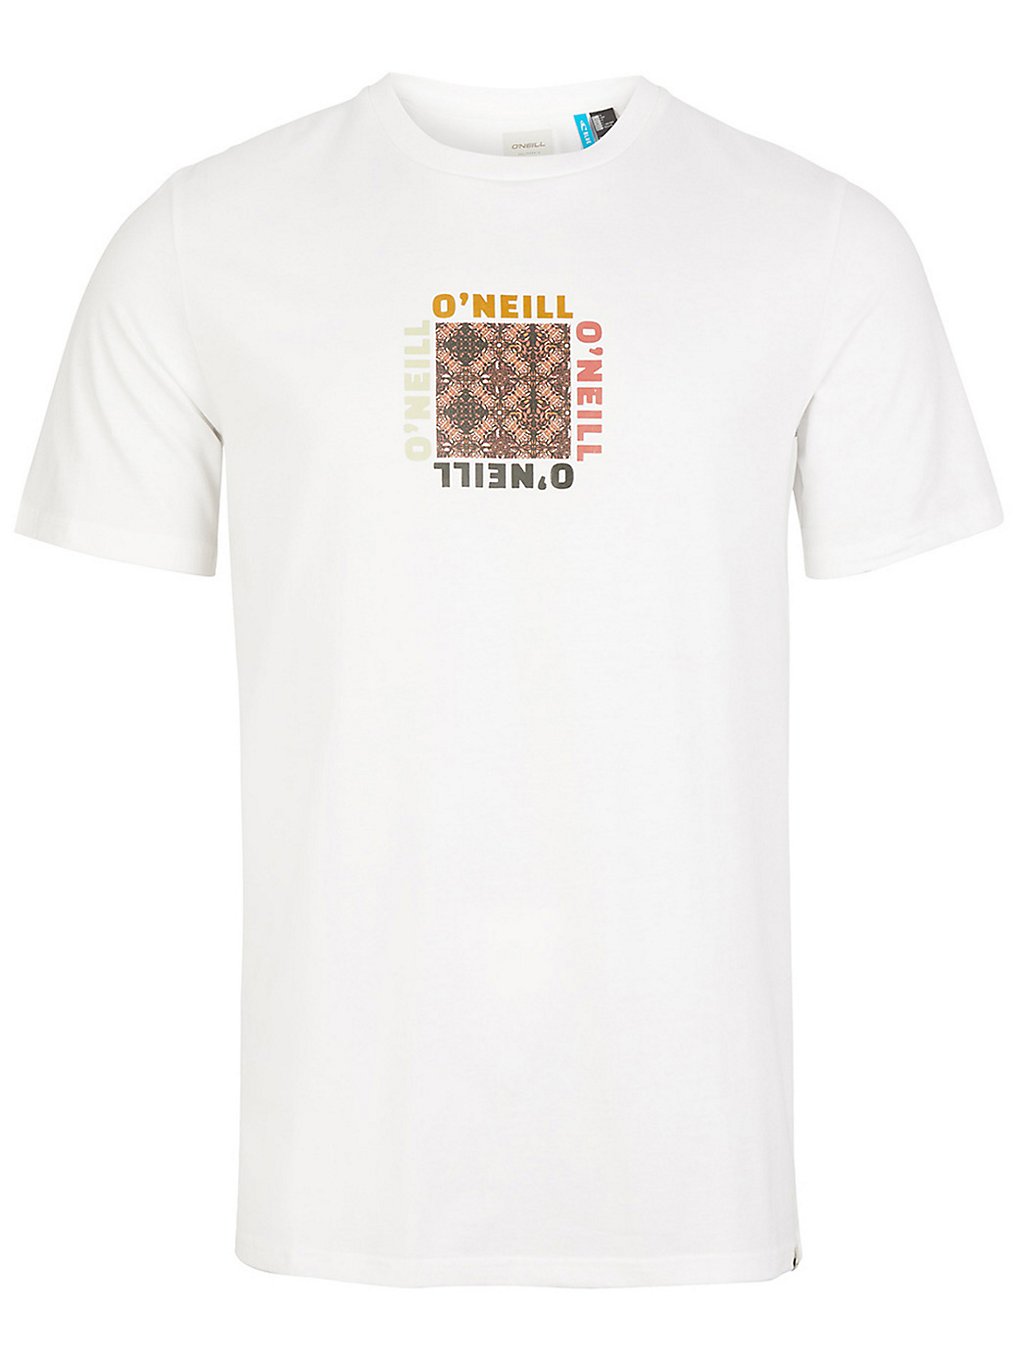 O'Neill Center Triibe T-Shirt powder white